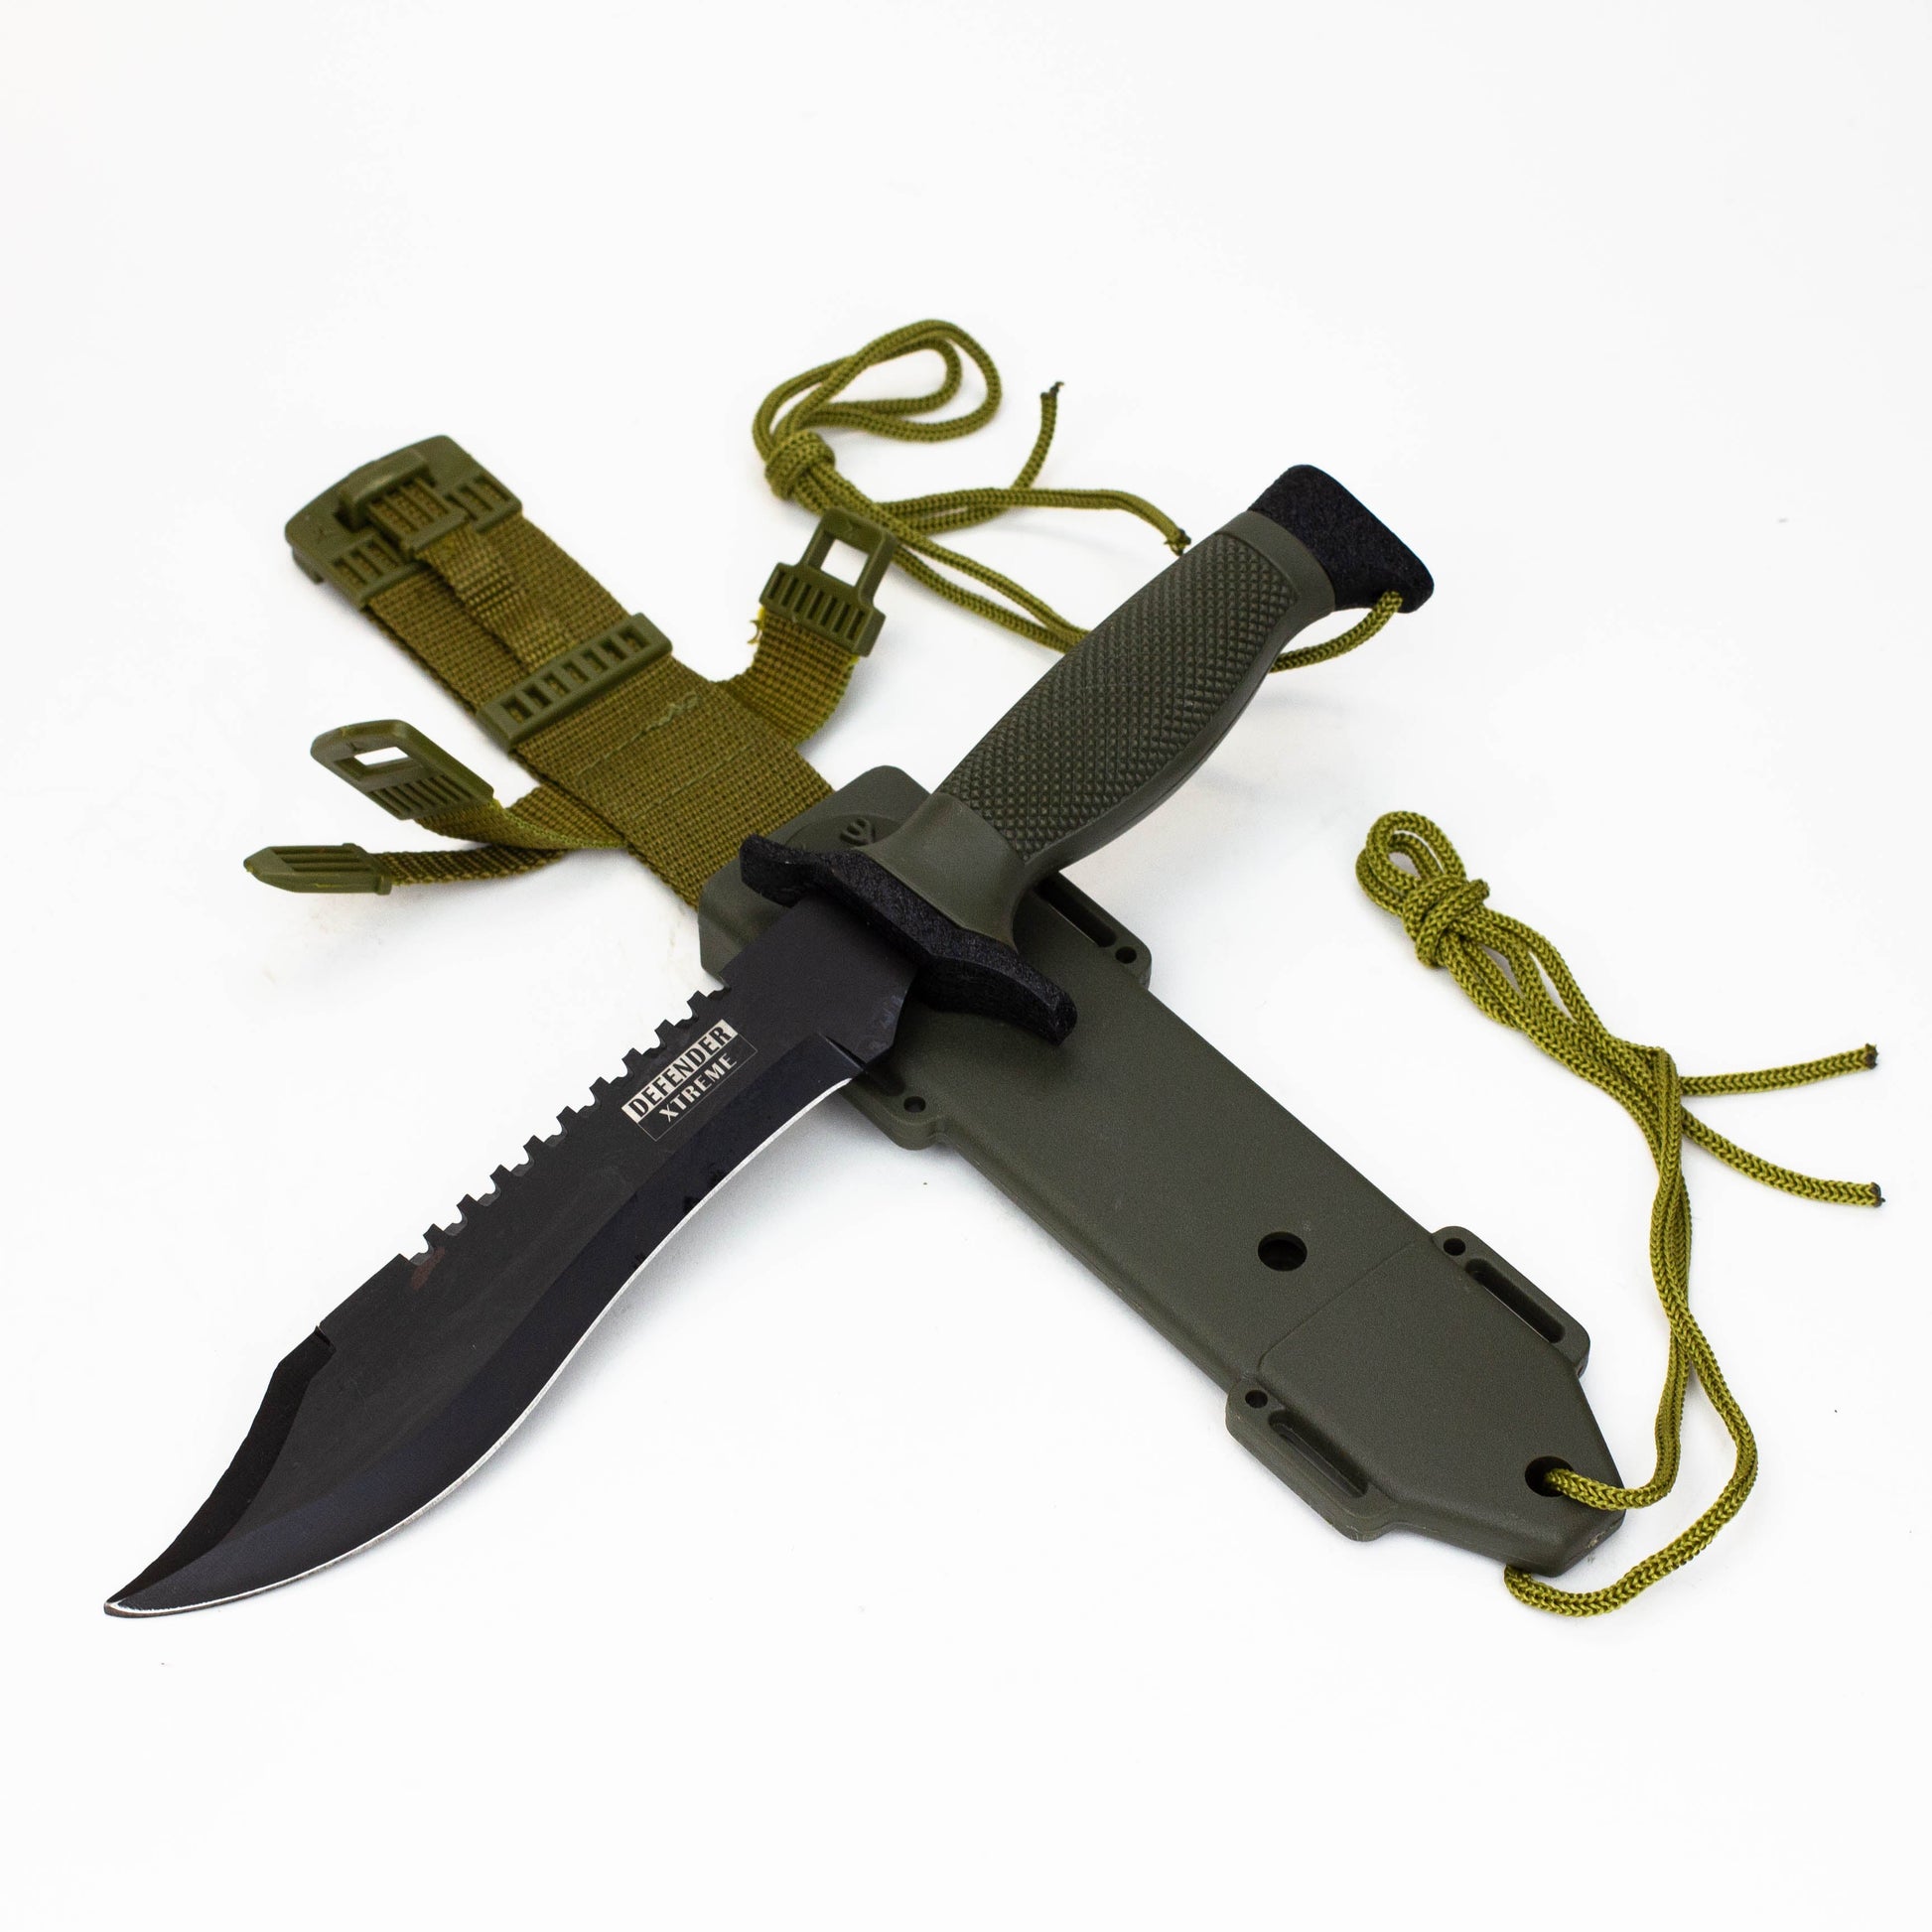 12" Heavy Duty Army hunting knife with ABS Sheath Knife_1